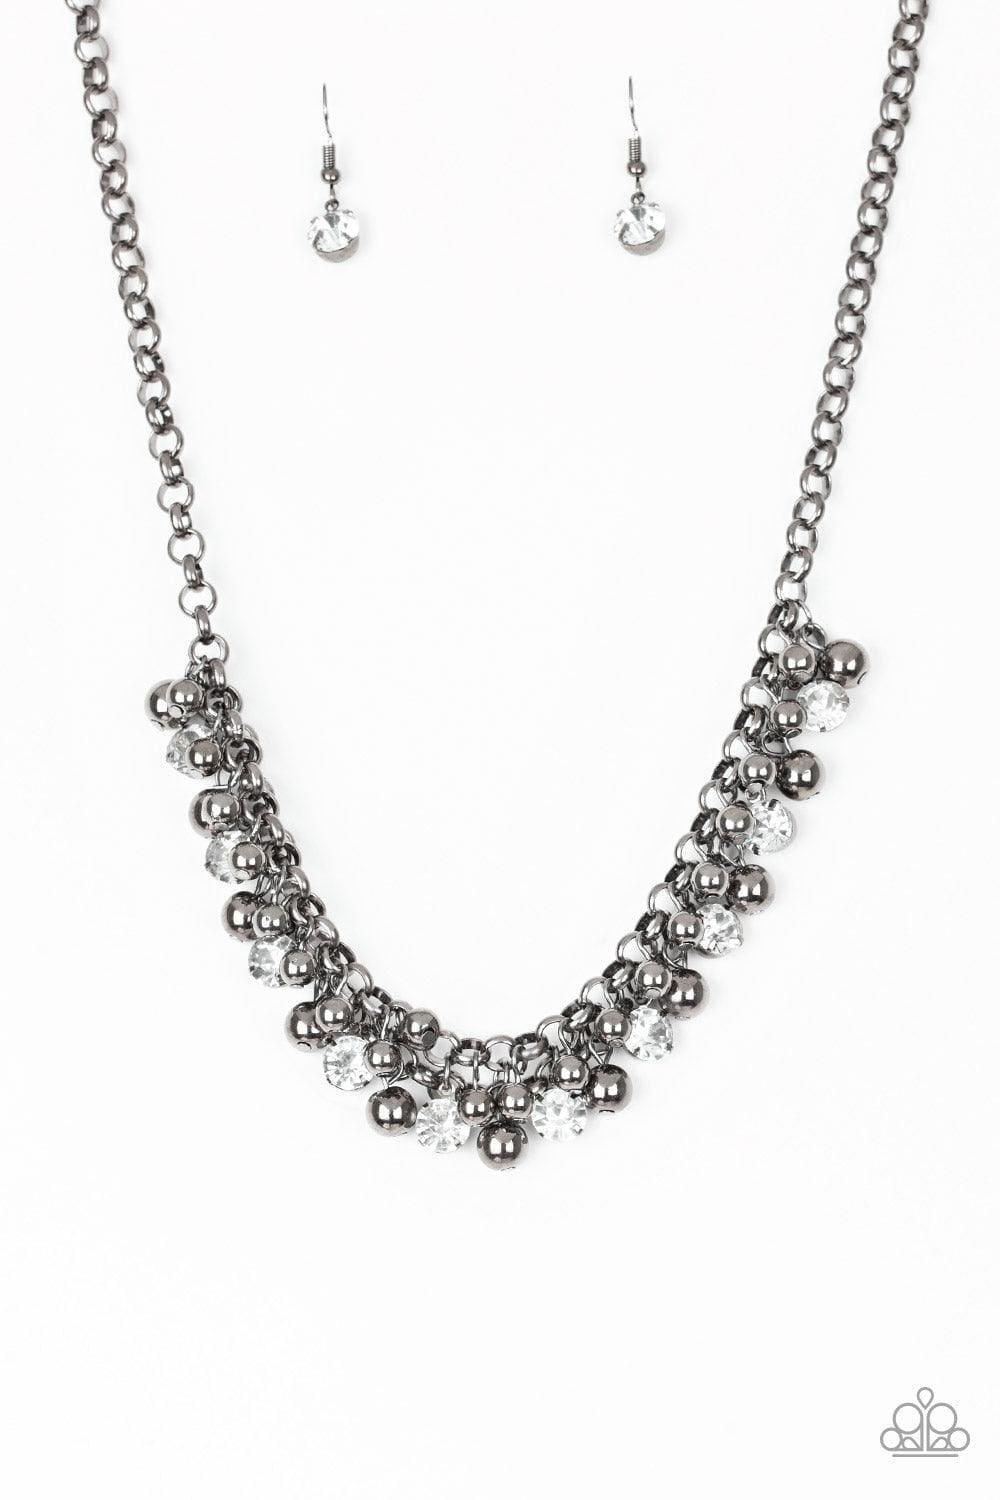 Paparazzi Accessories - Wall Street Winner - Black Necklace - Bling by JessieK